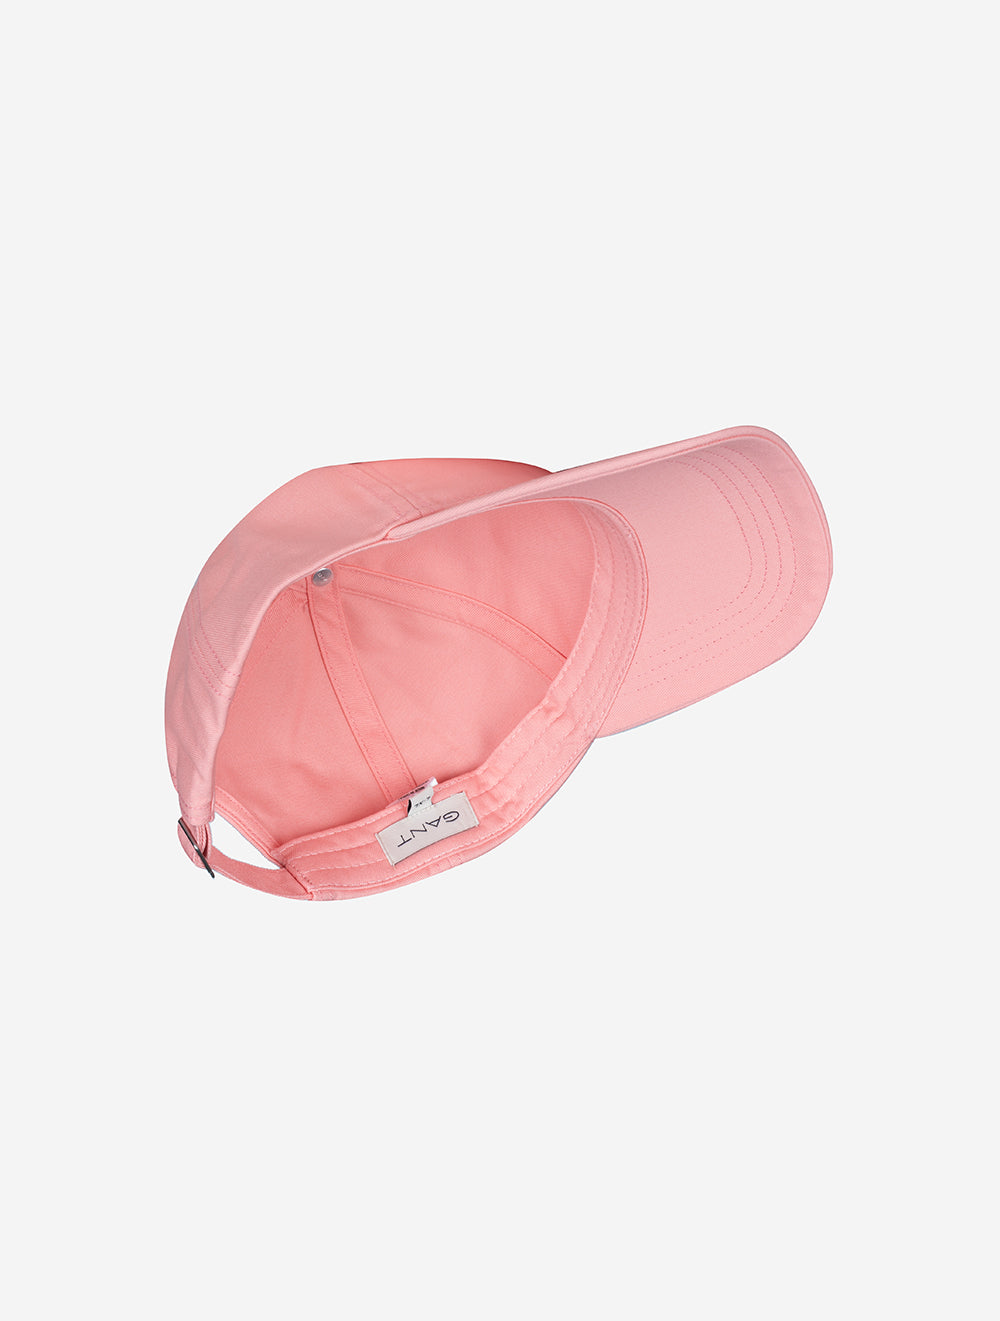 Unisex Shield Cap Bubbelgum Pink